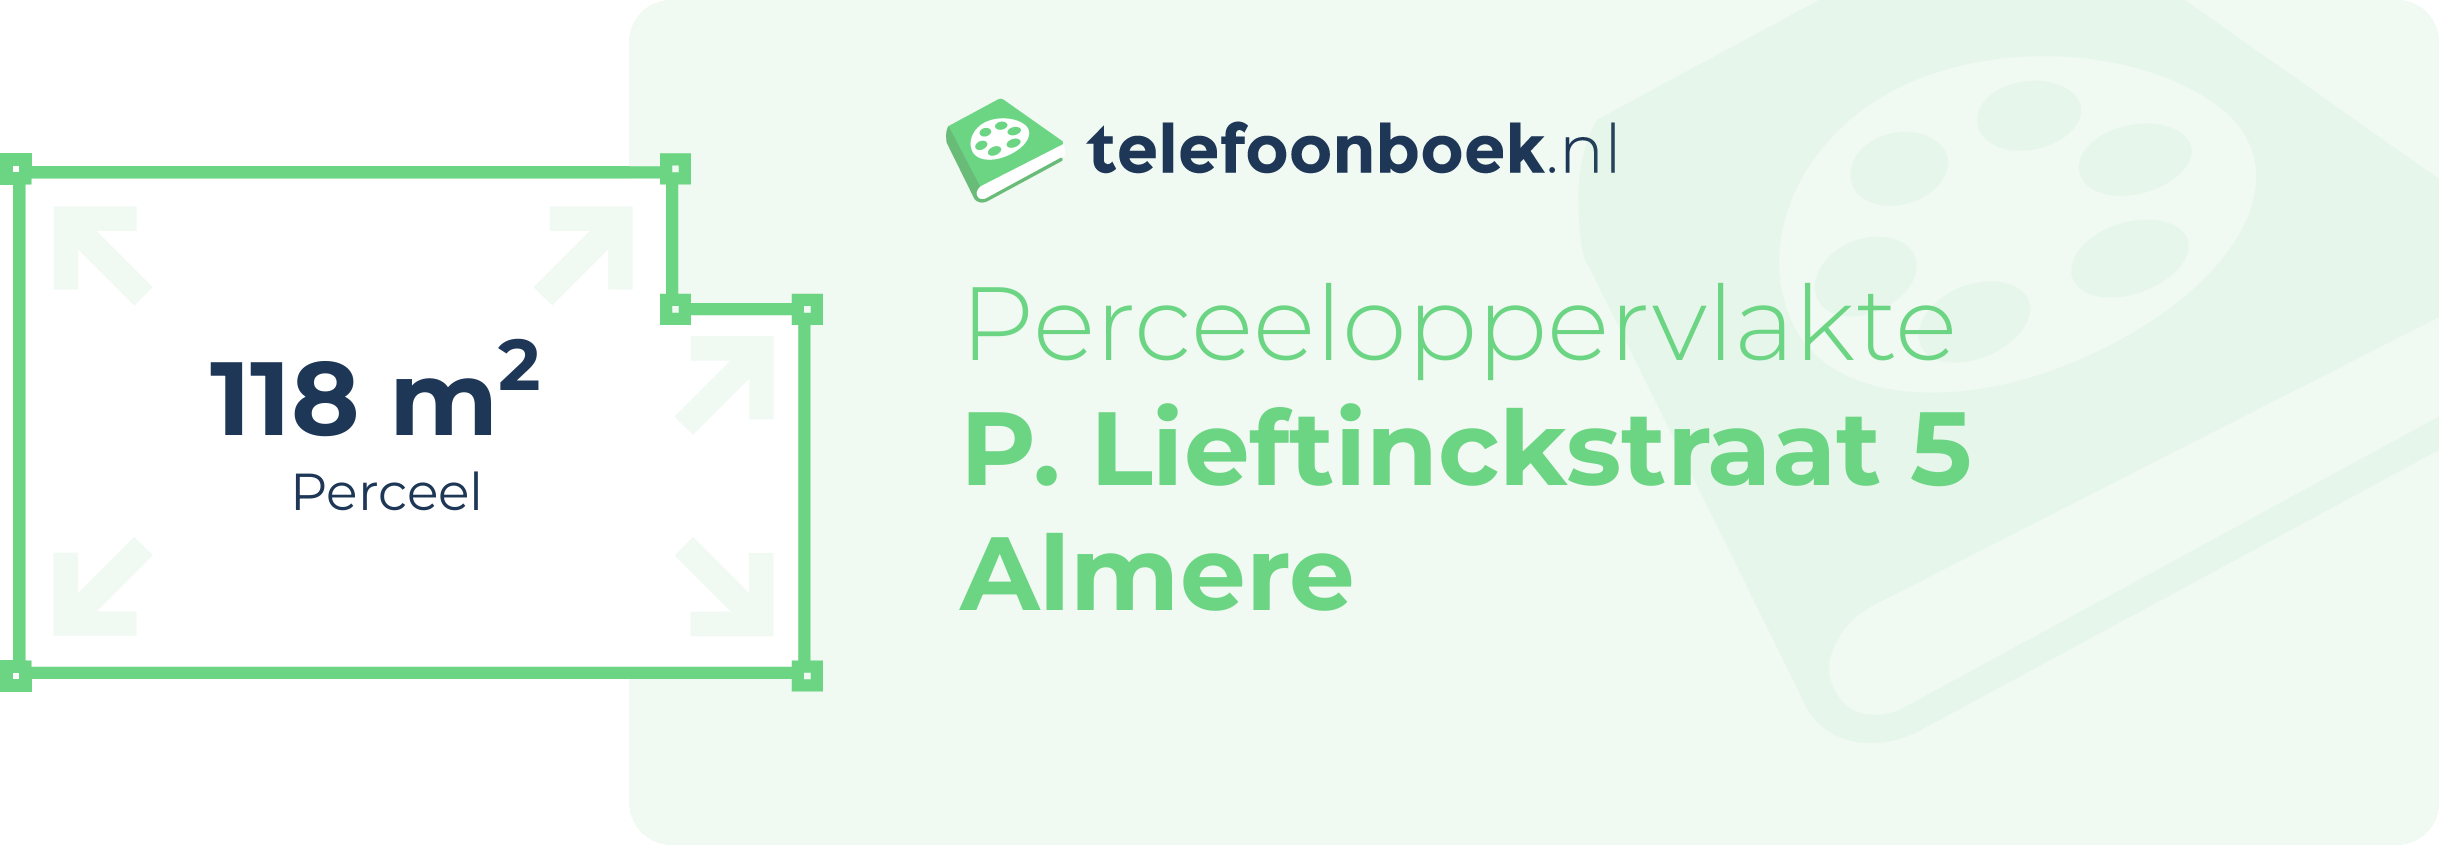 Perceeloppervlakte P. Lieftinckstraat 5 Almere